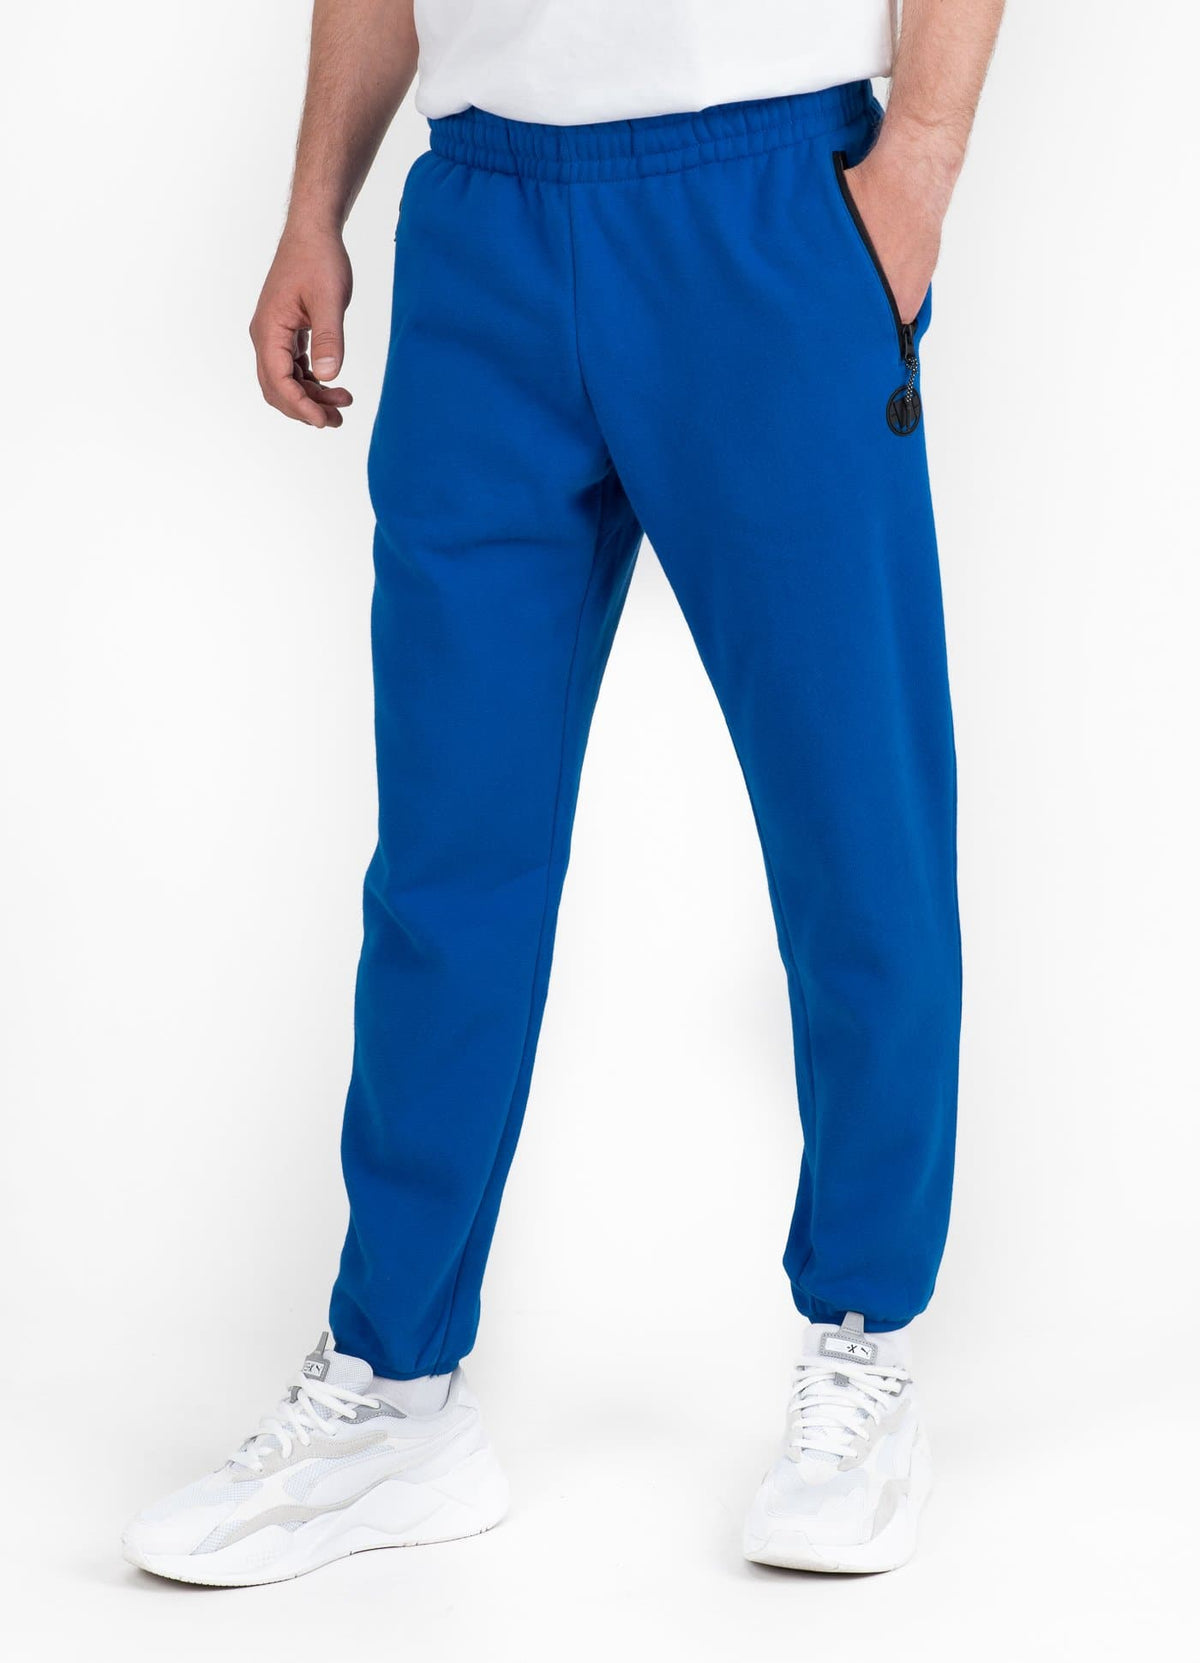 Track Pants ATHLETIC Blue - Pitbull West Coast International Store 